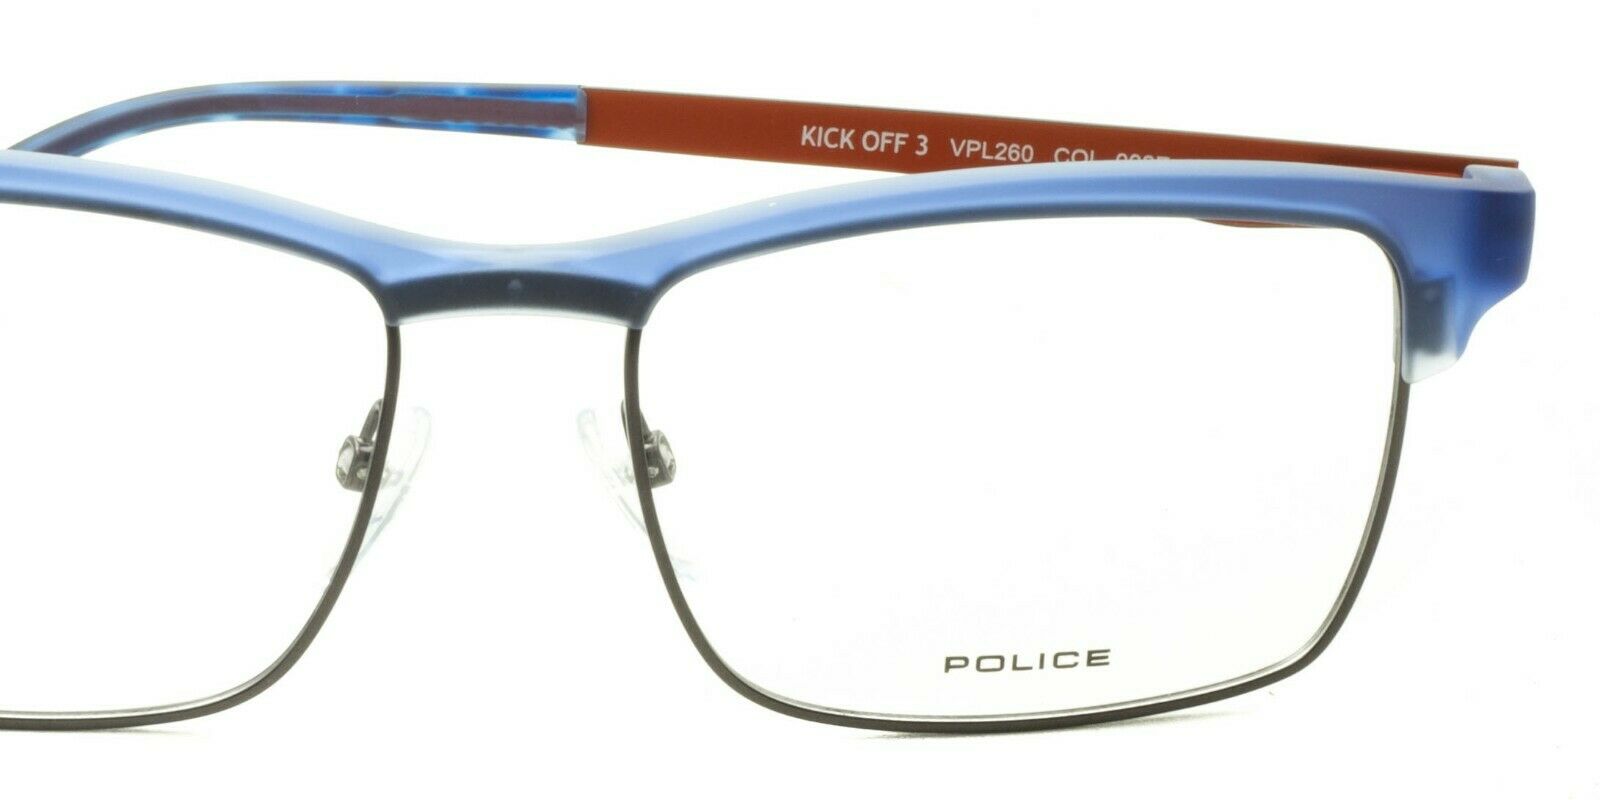 POLICE KICK OFF 3 VPL 260 COL. 092E 54mm FRAMES Glasses RX Optical Eyewear - New